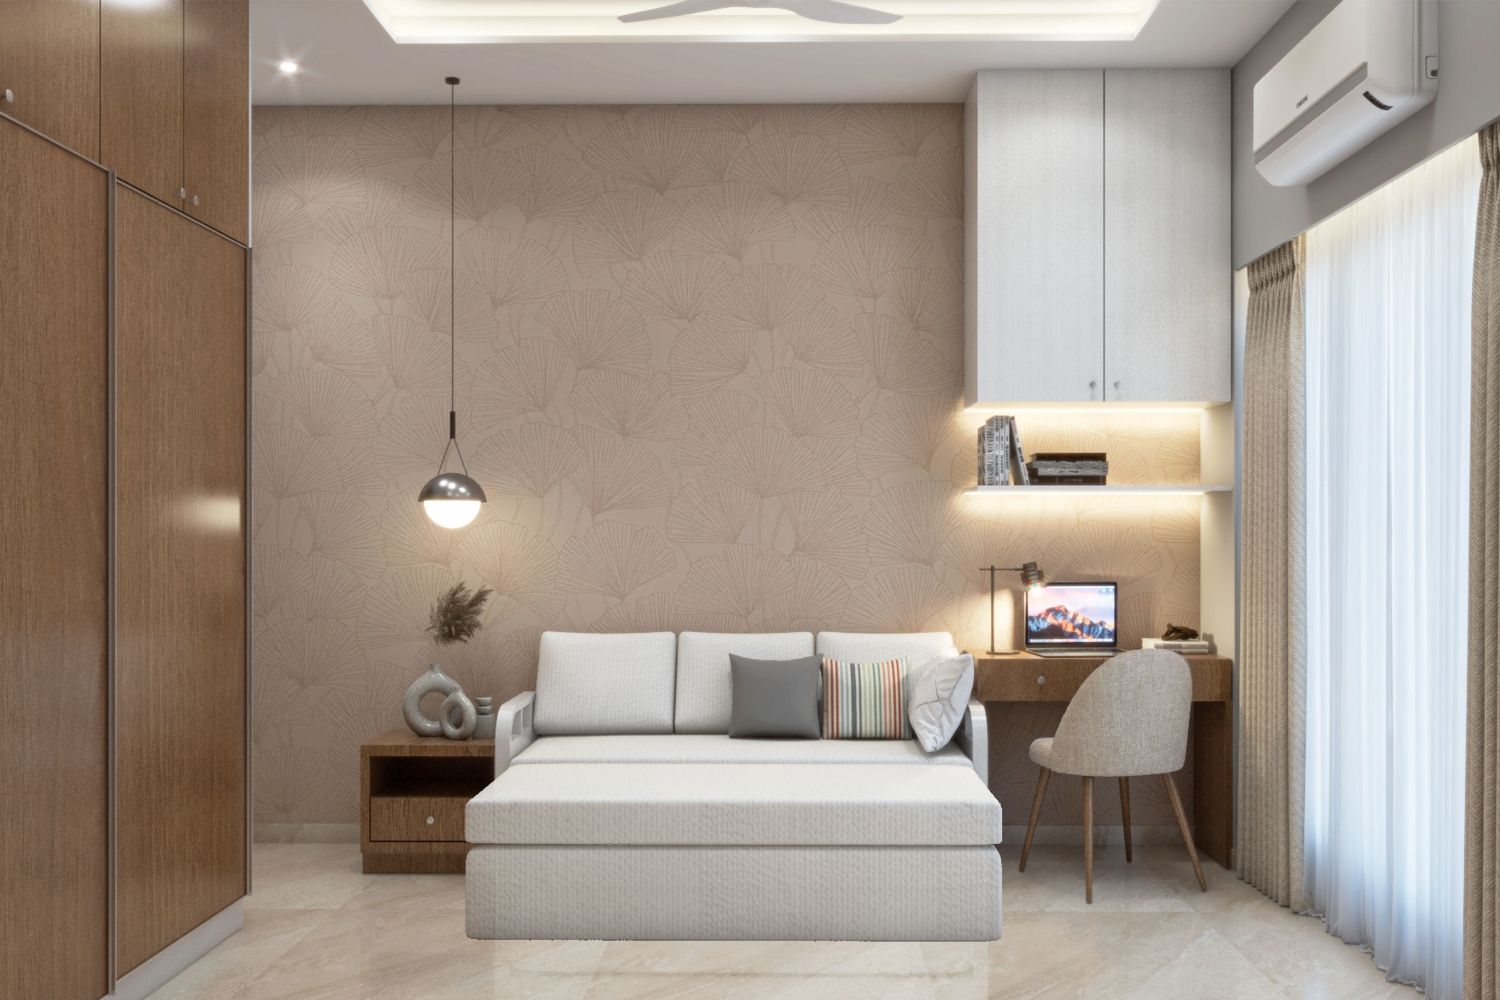 Modern Floral Bedroom Wallpaper Design In Brown